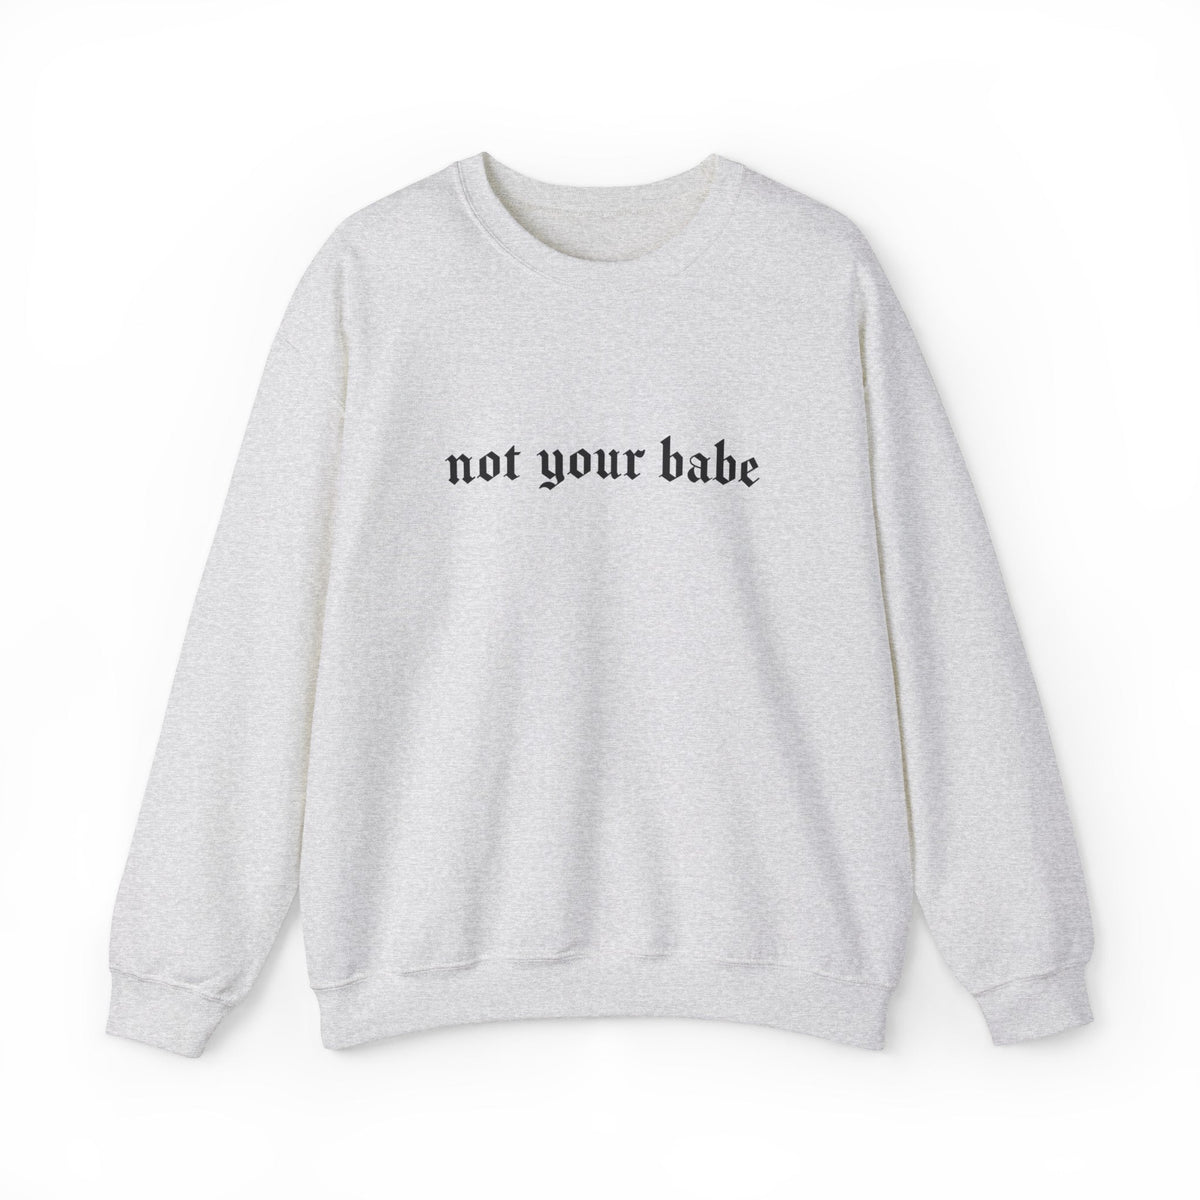 Not Your Babe Classic Goth Crew Neck Sweatshirt - Goth Cloth Co.Sweatshirt80751711074613952803